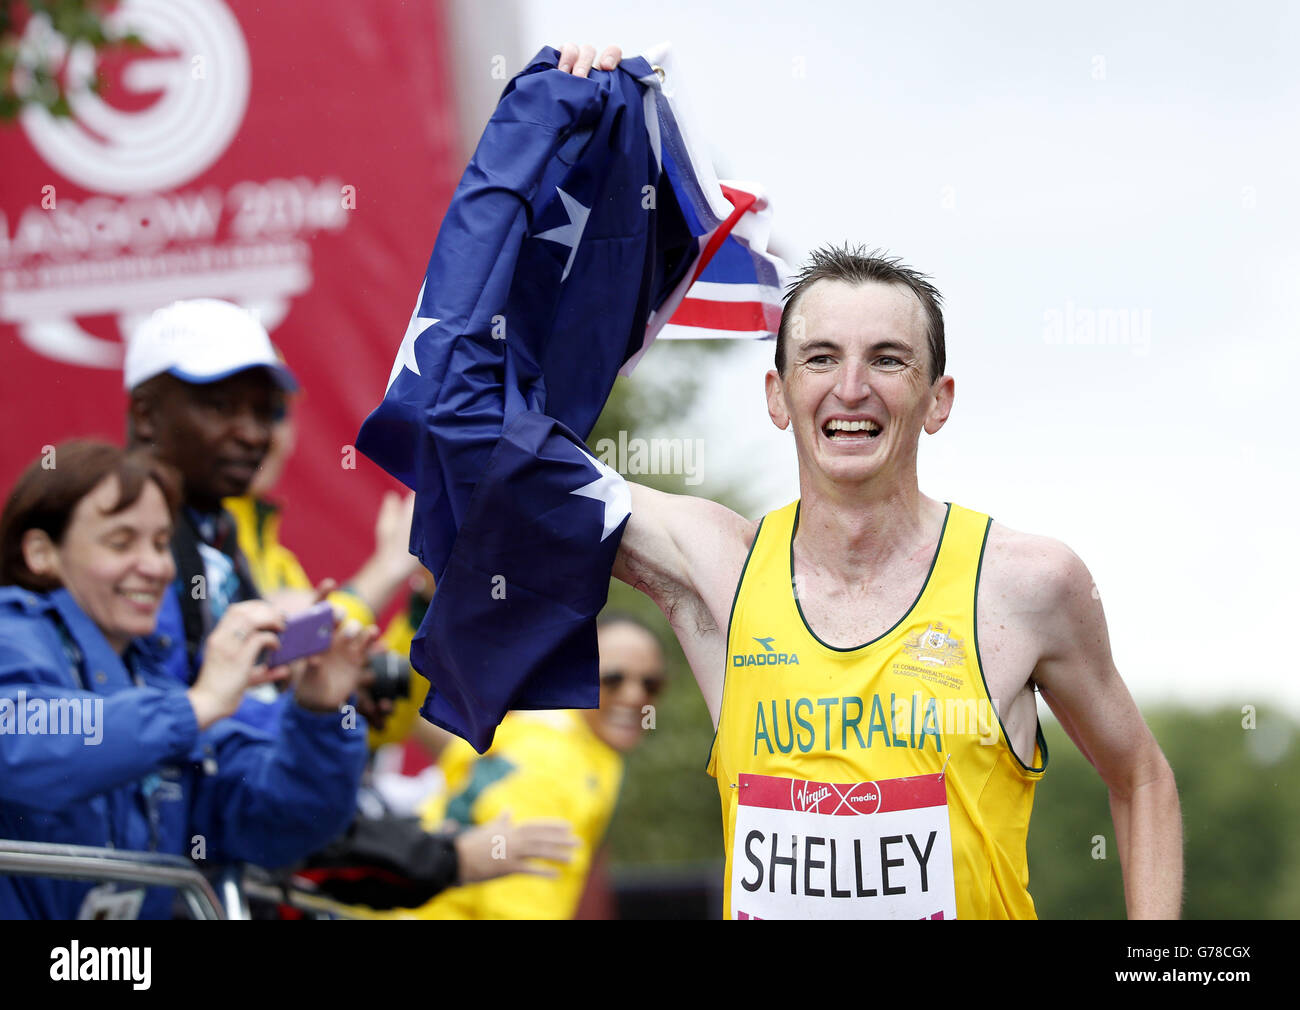 Sport - 2014 Commonwealth Games - Day Four. Australia's Michael Shelley wins the men's marathon during the 2014 Commonwealth Games in Glasgow. Stock Photo